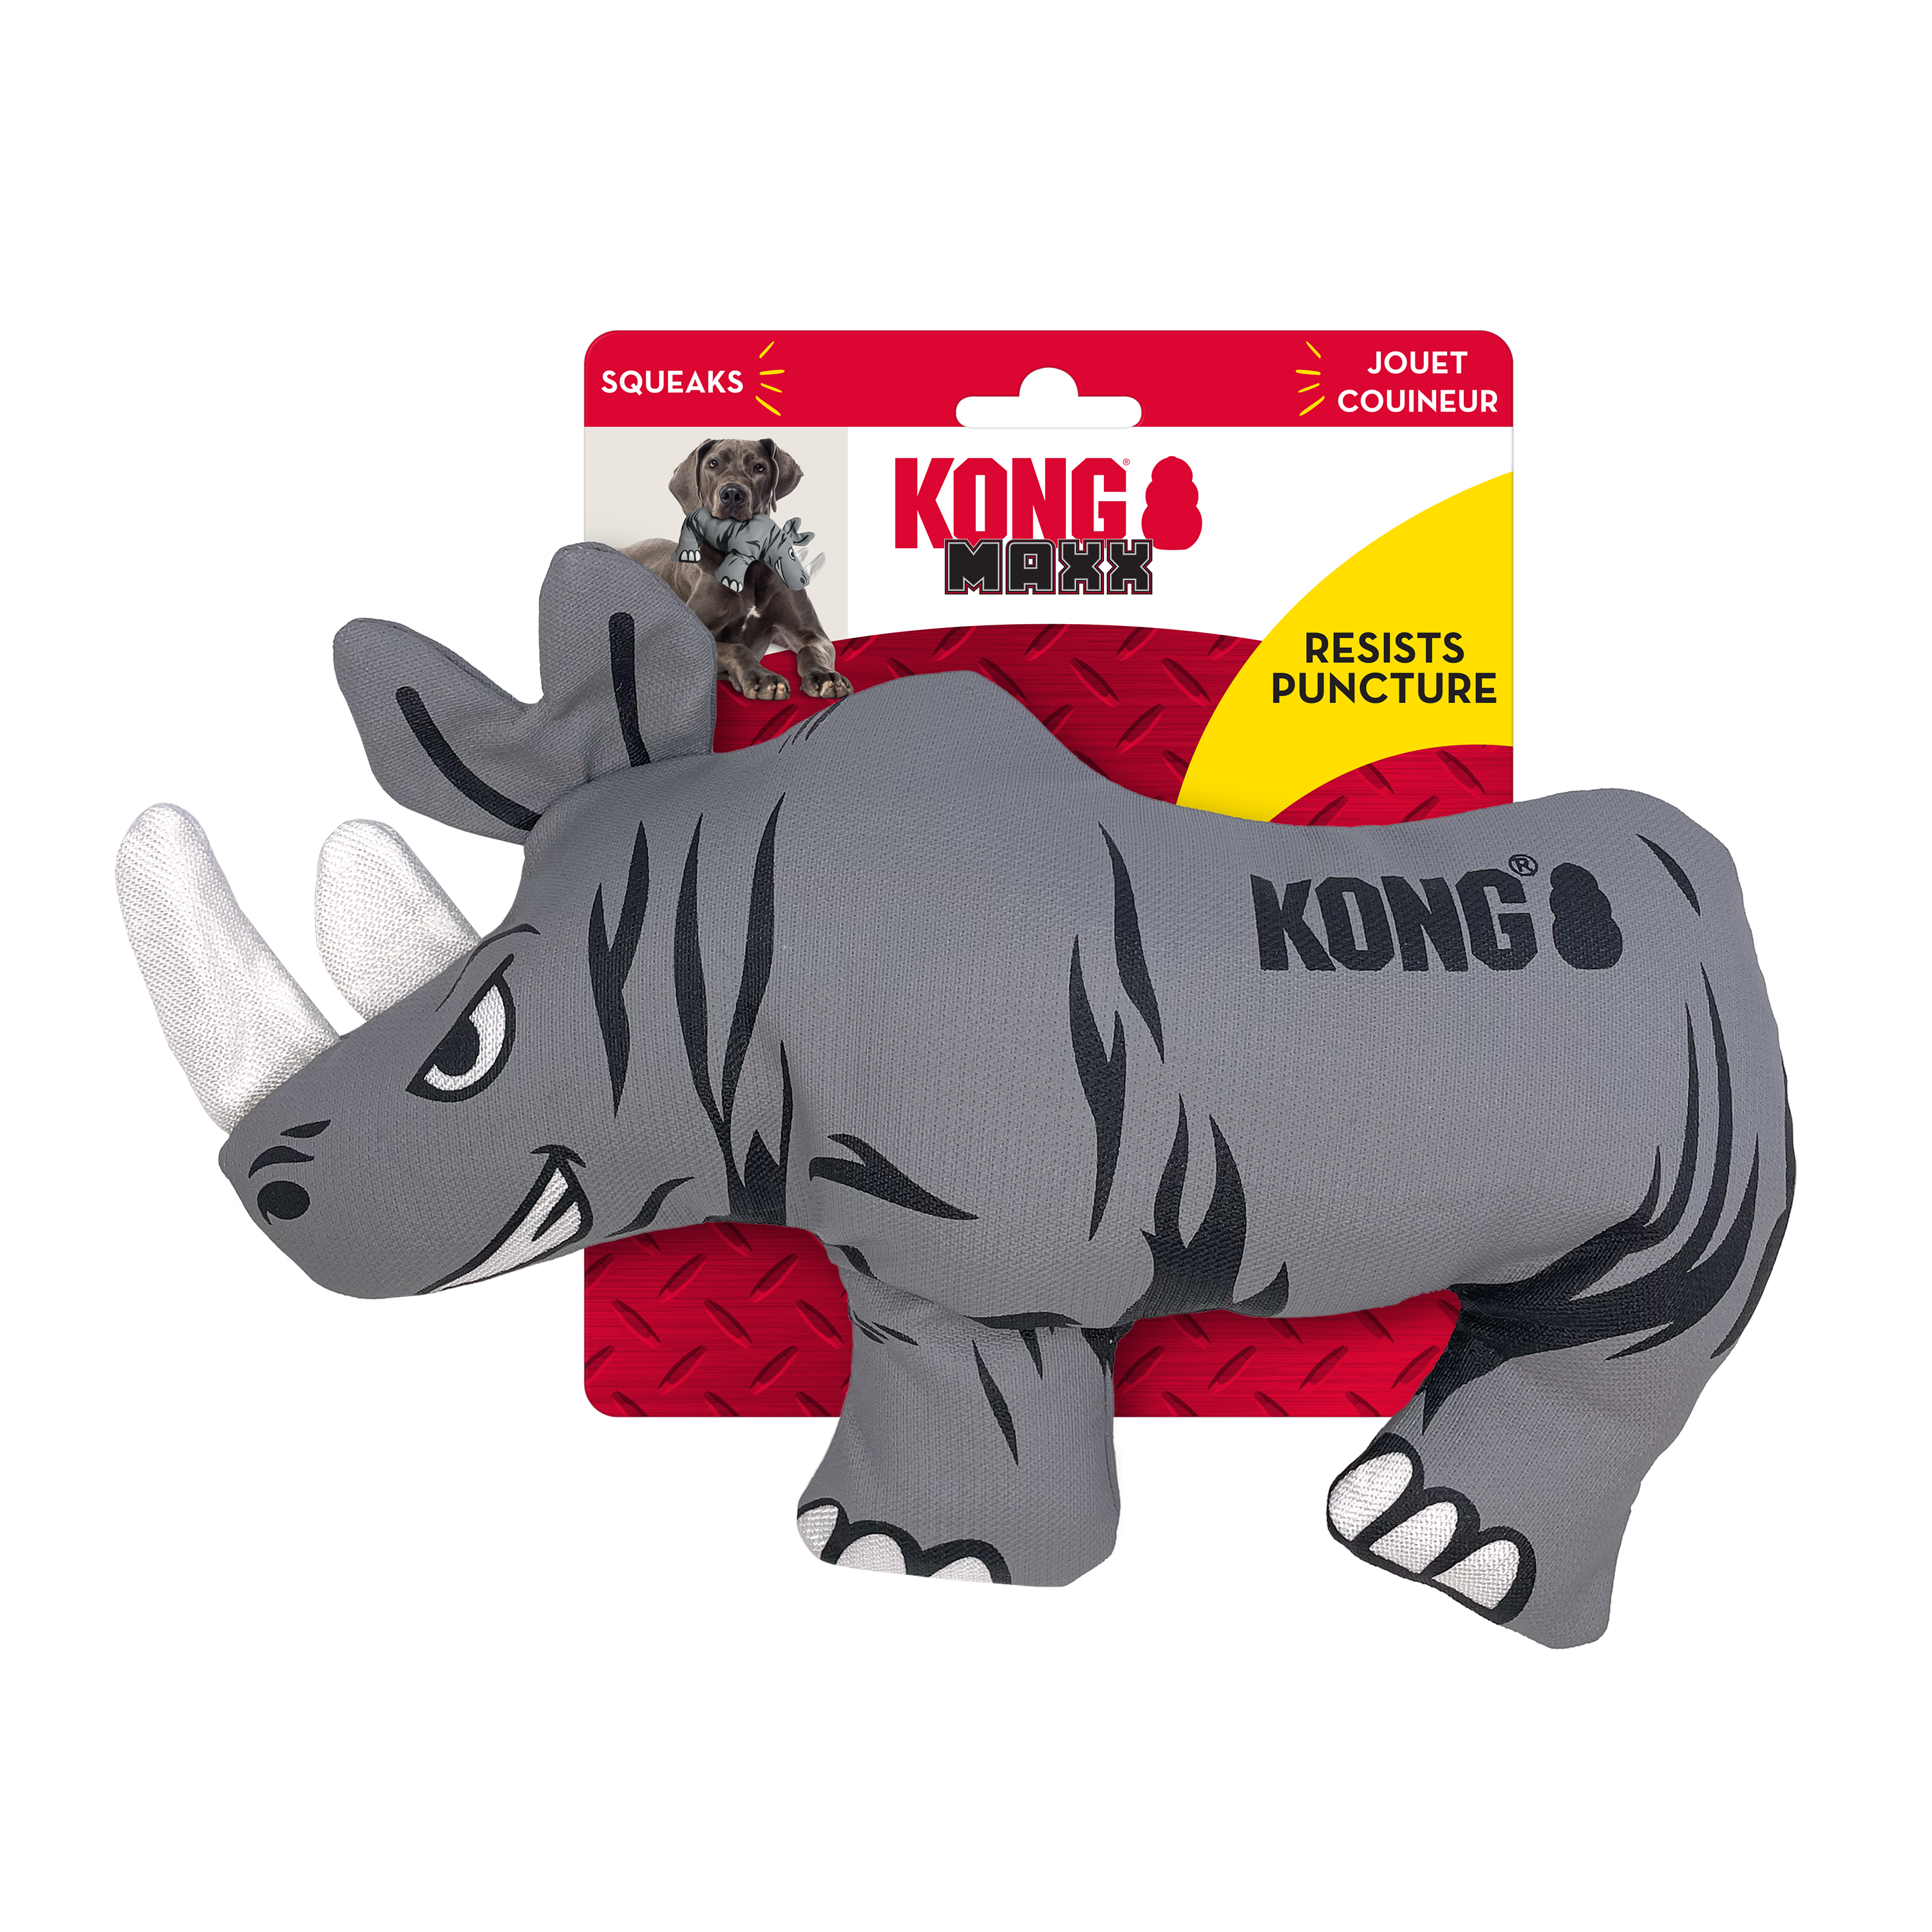 Maxx Rhino onpack product image